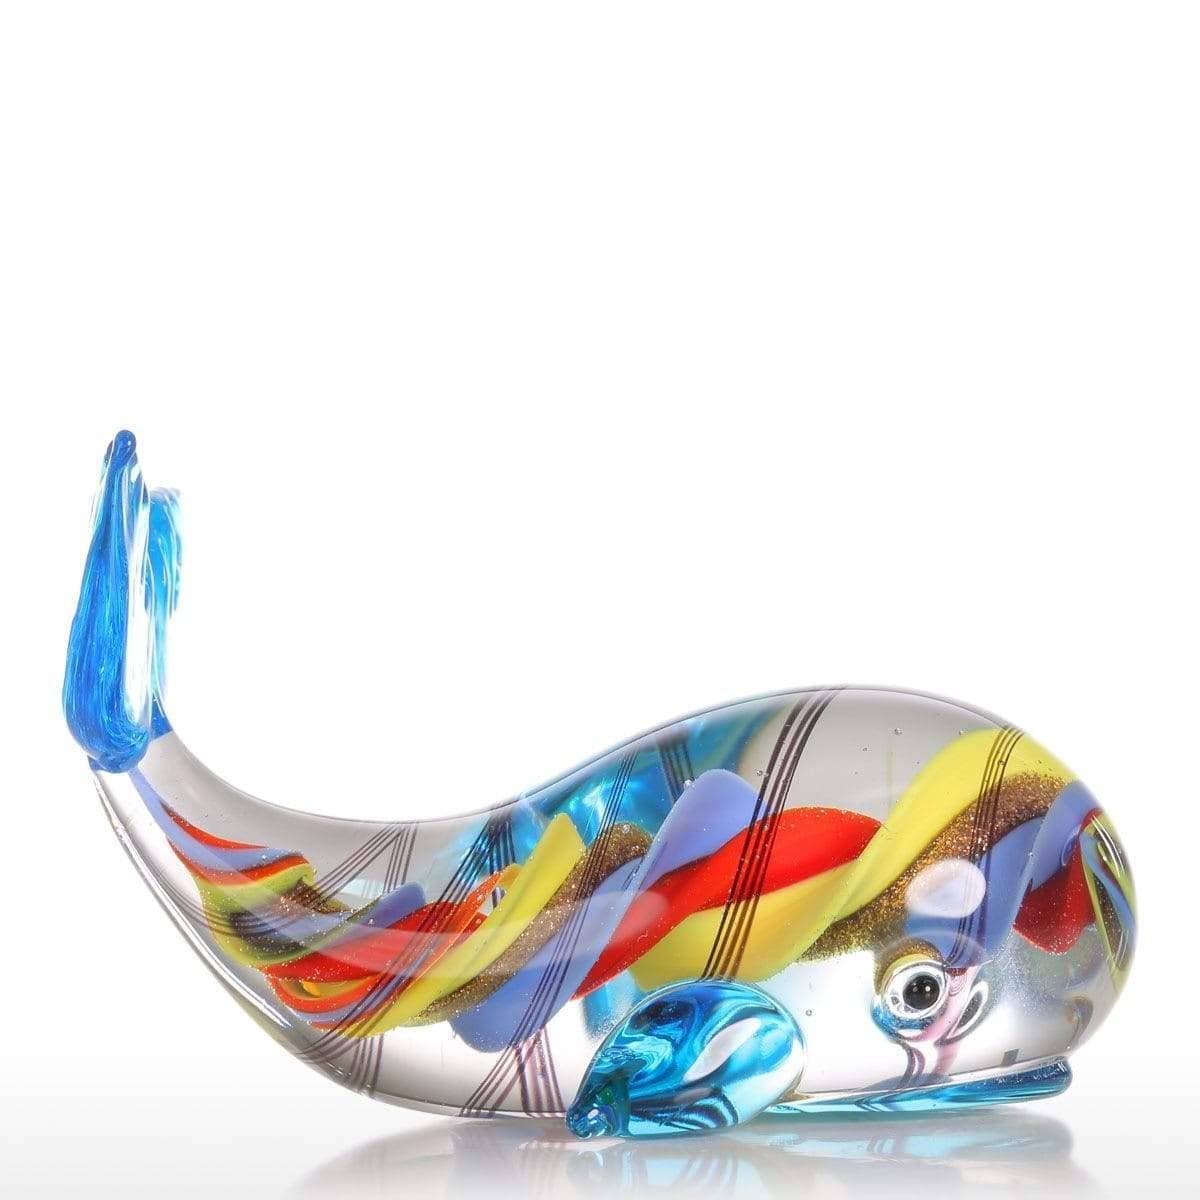 Handblown Glass Whale Figurine - Modern & Stylish Home Decor